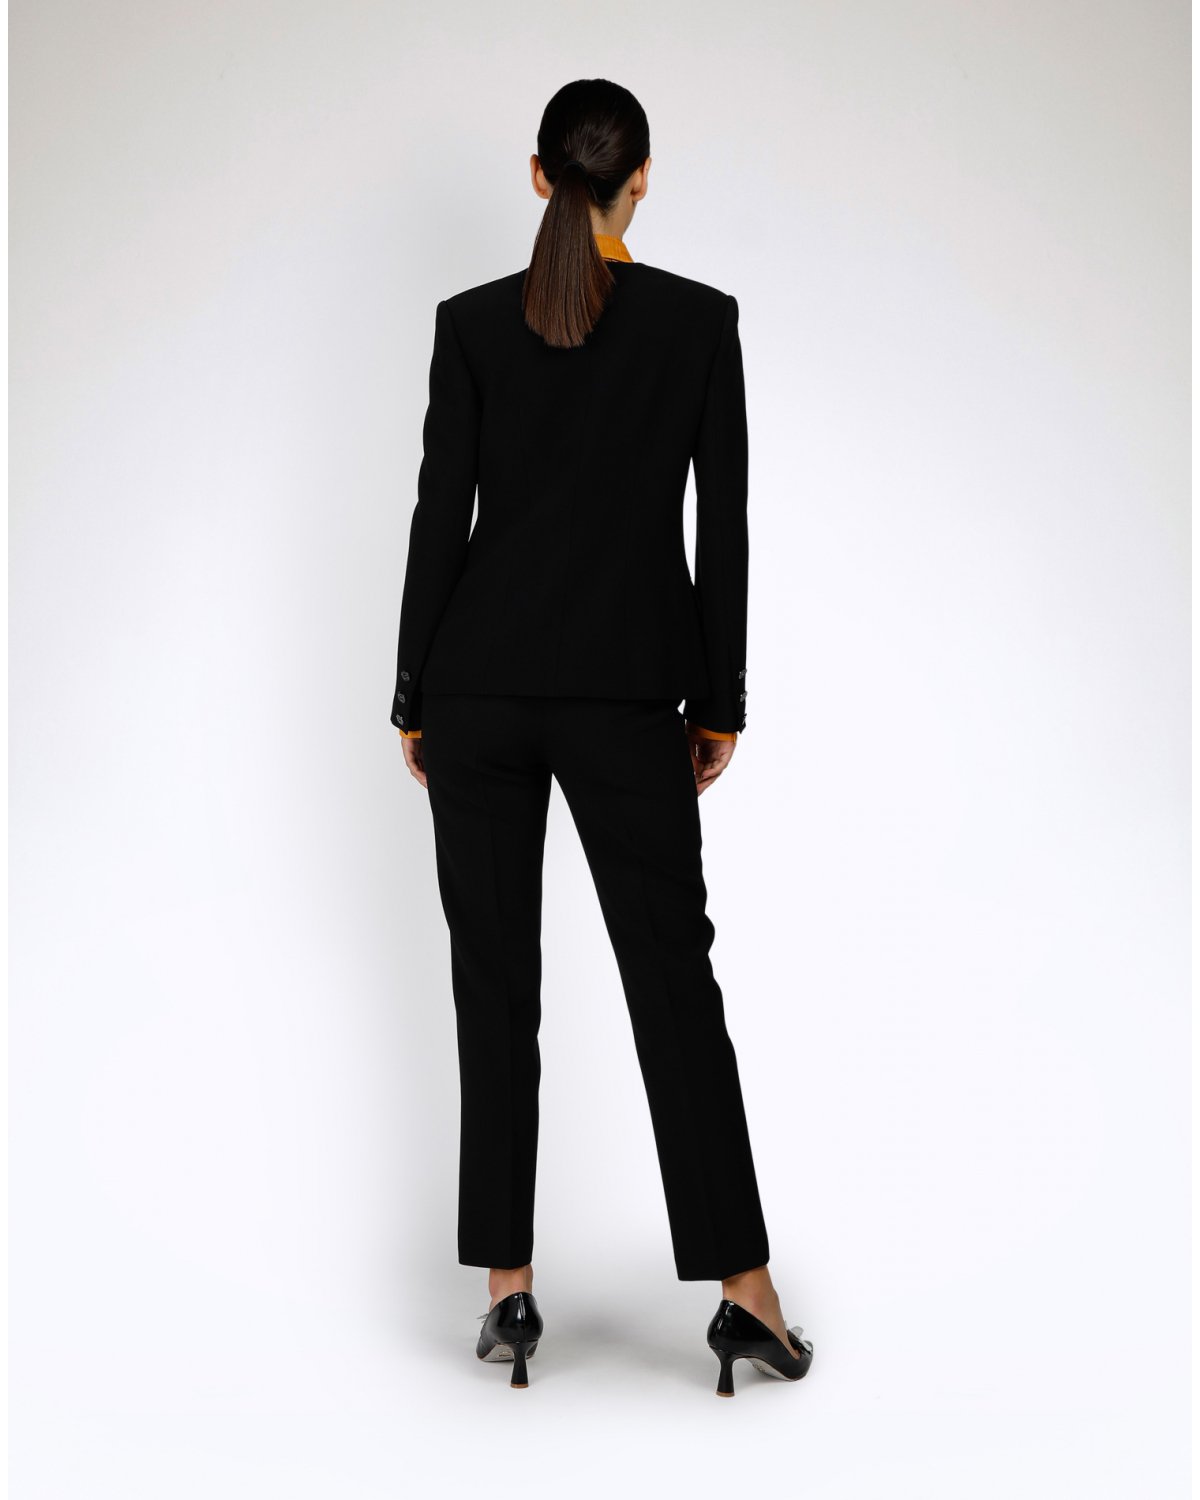 Black twill blazer | Party Collection, Evening Essential | Genny